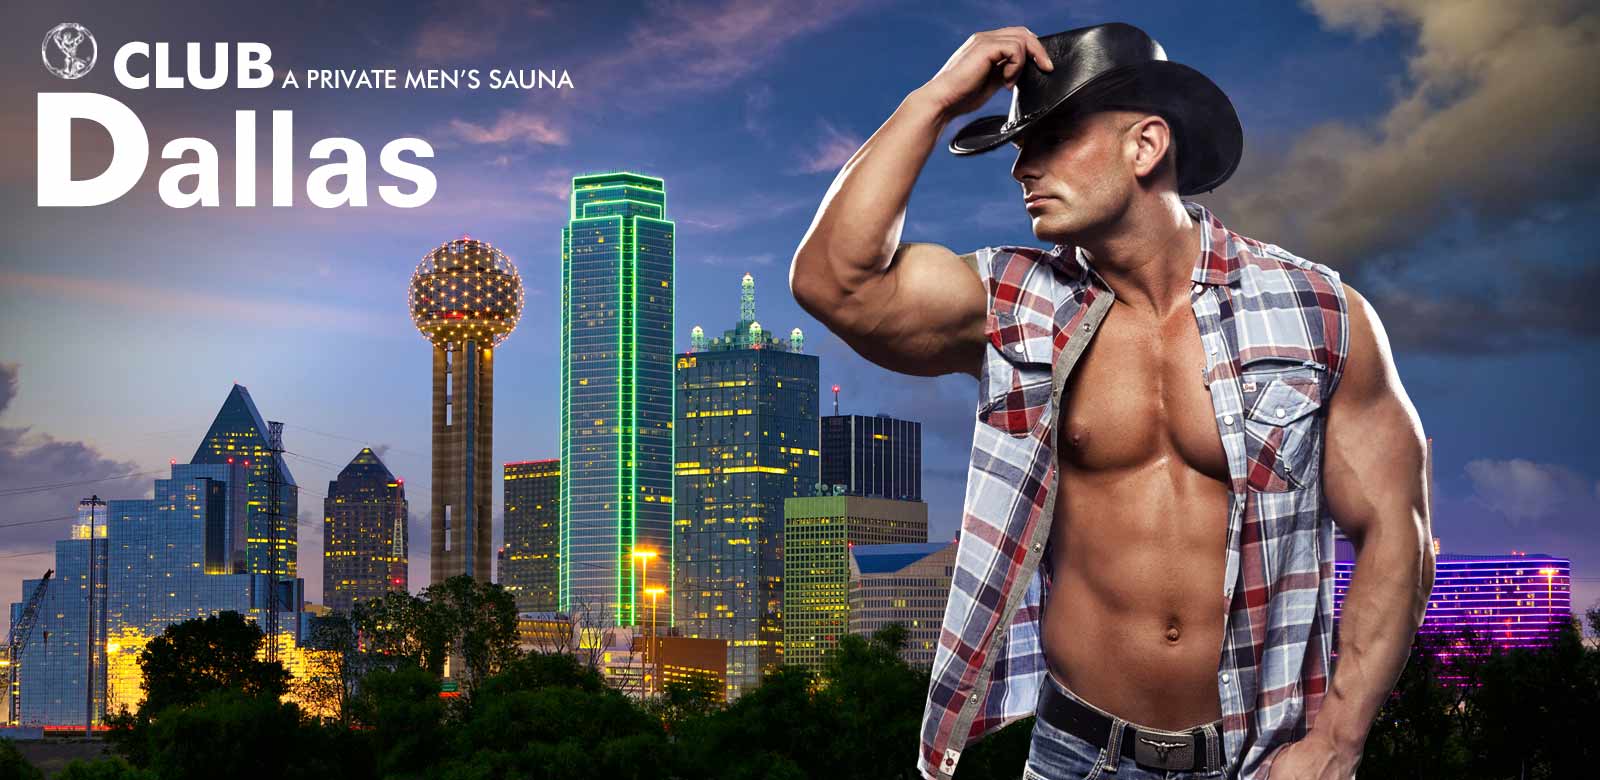 Club Saunas - Club Dallas - Private Men's Club